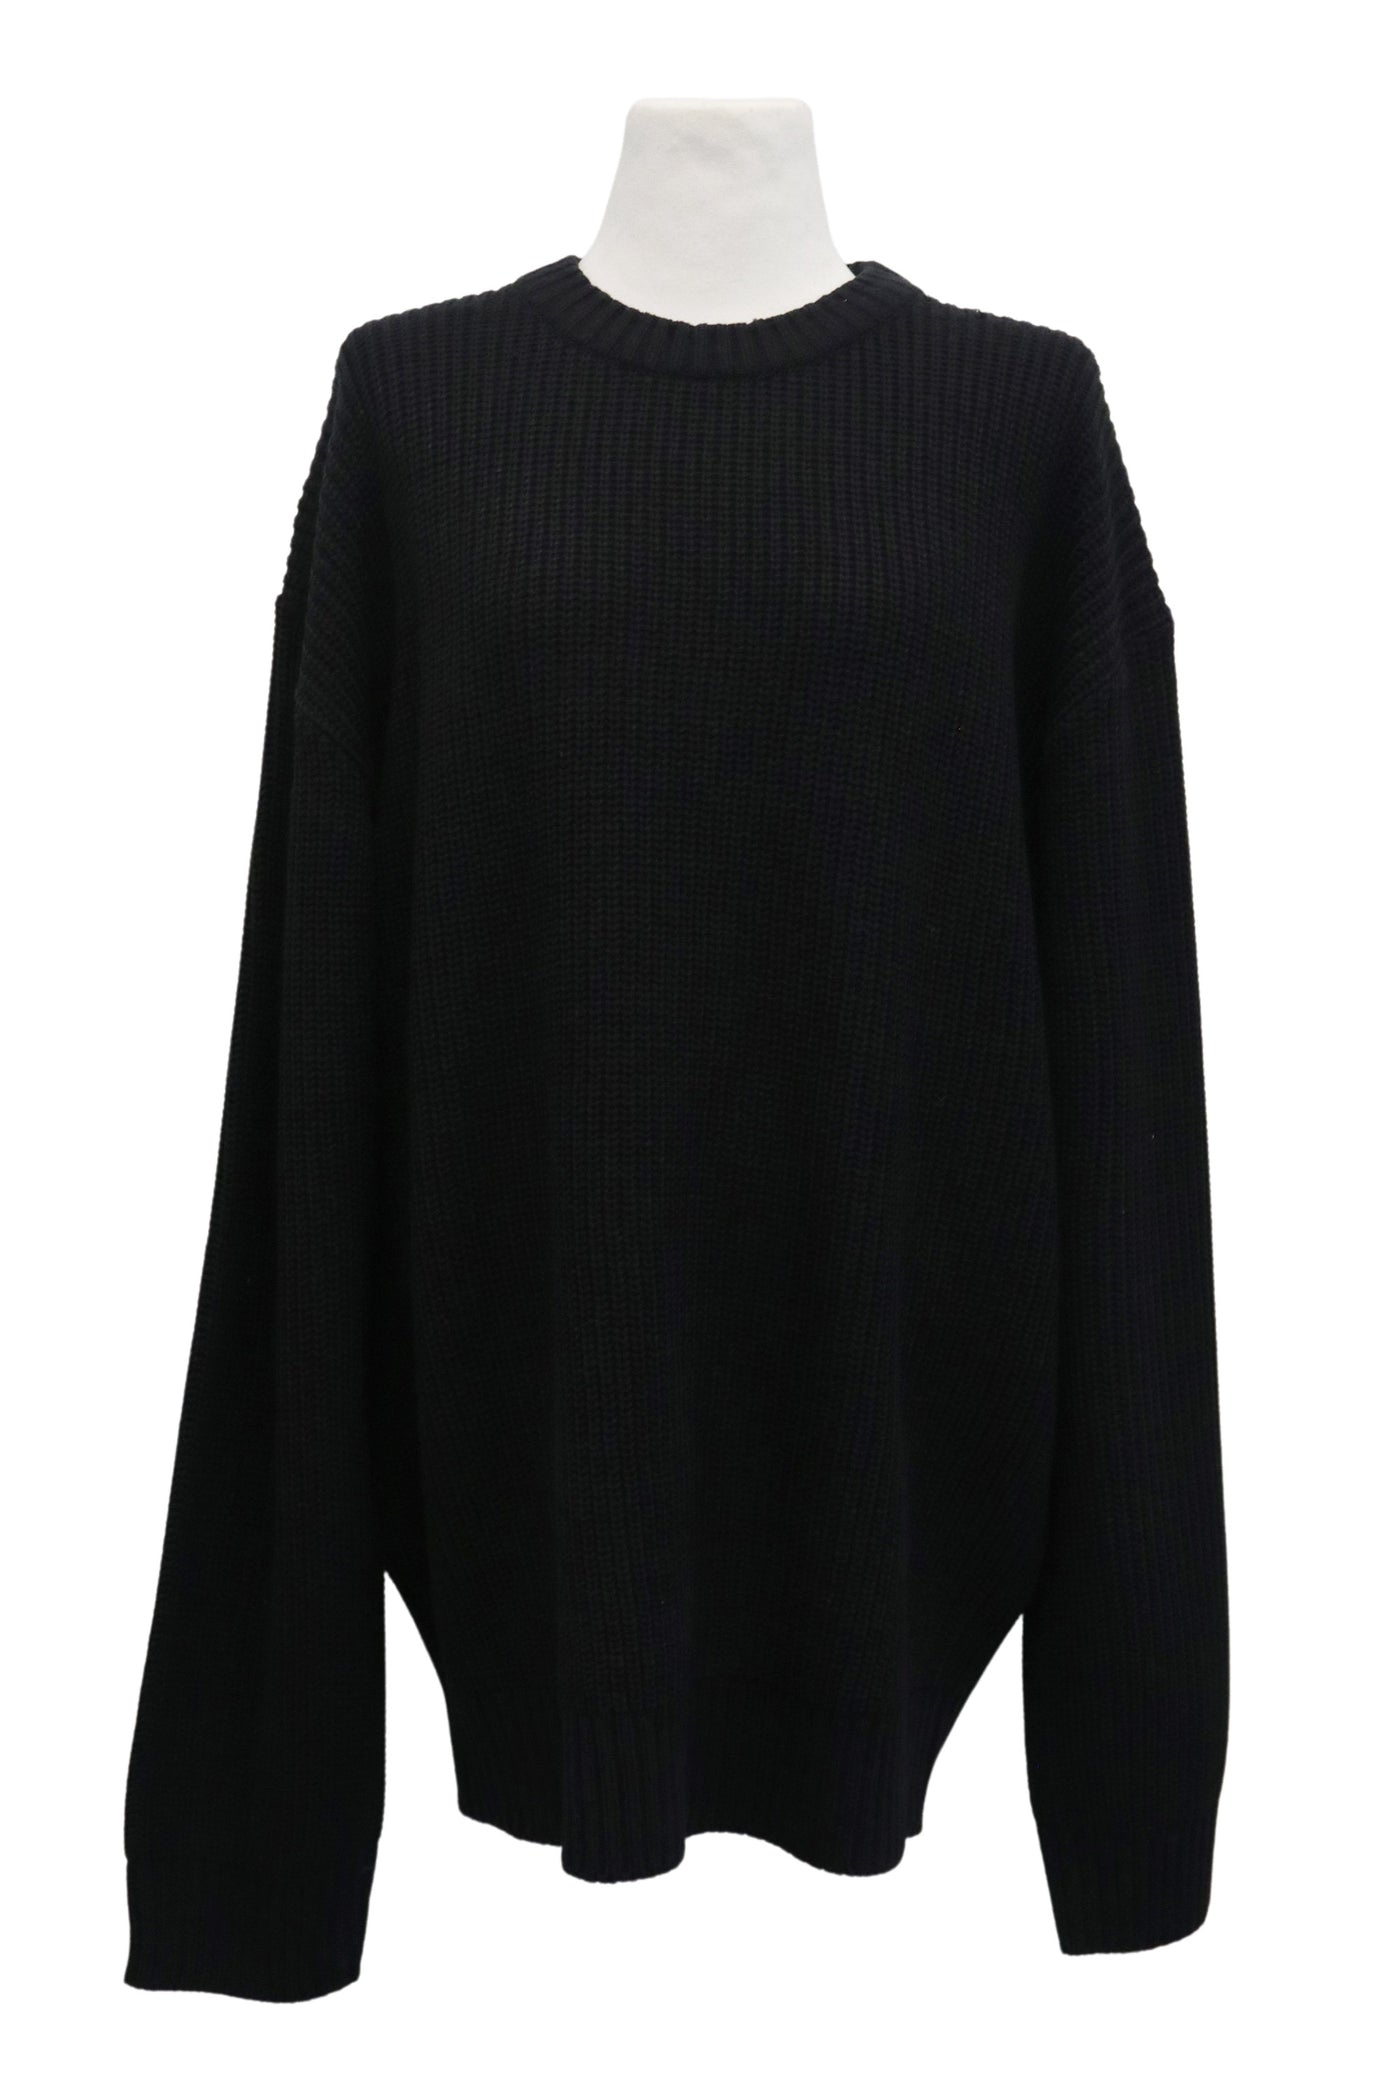 storets.com Logan Oversized Sweater Dress/Top